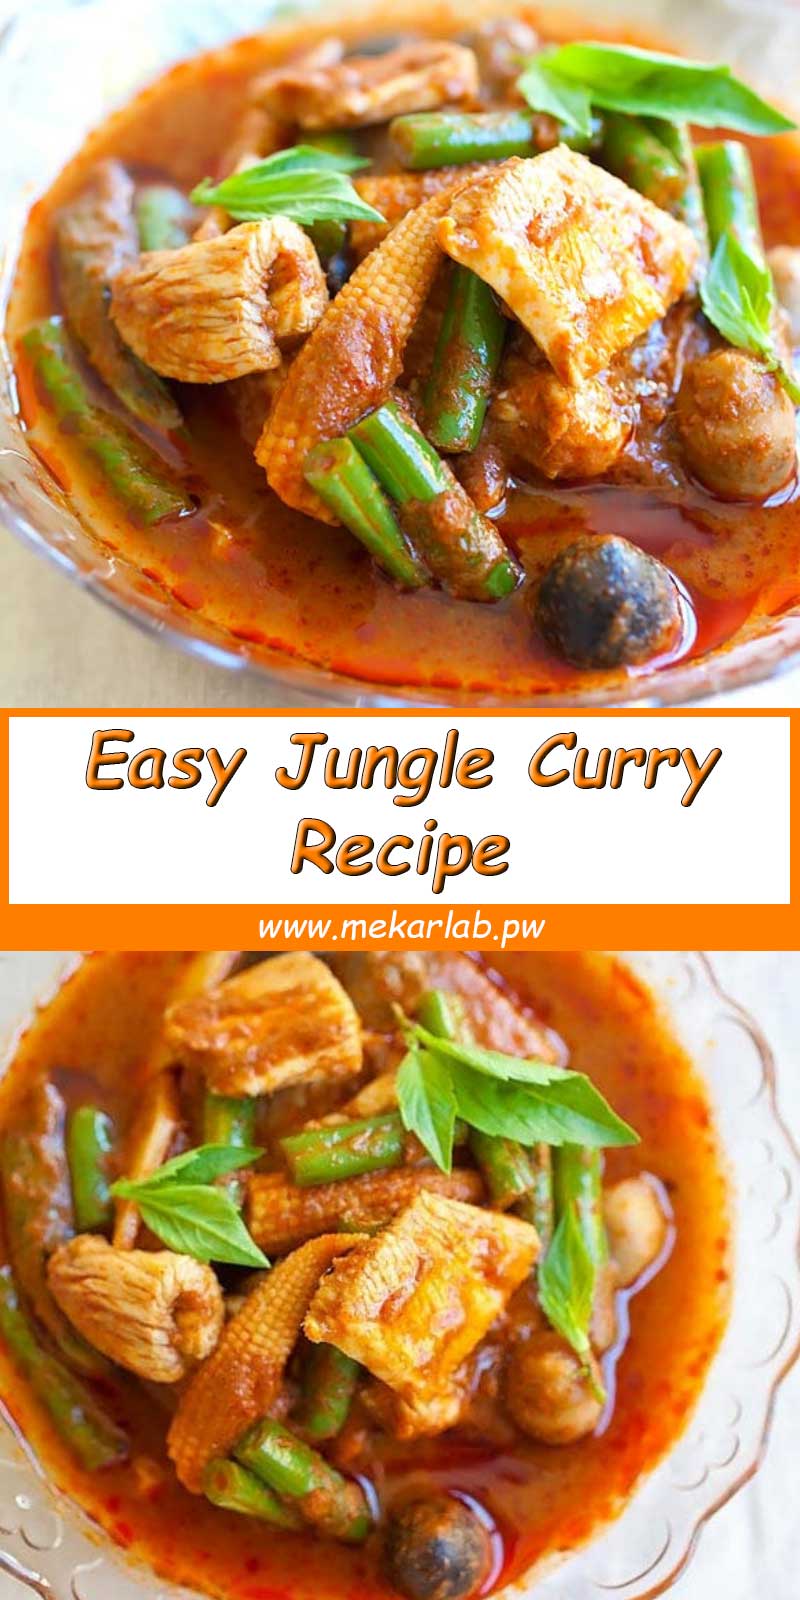 Easy Jungle Curry Recipe